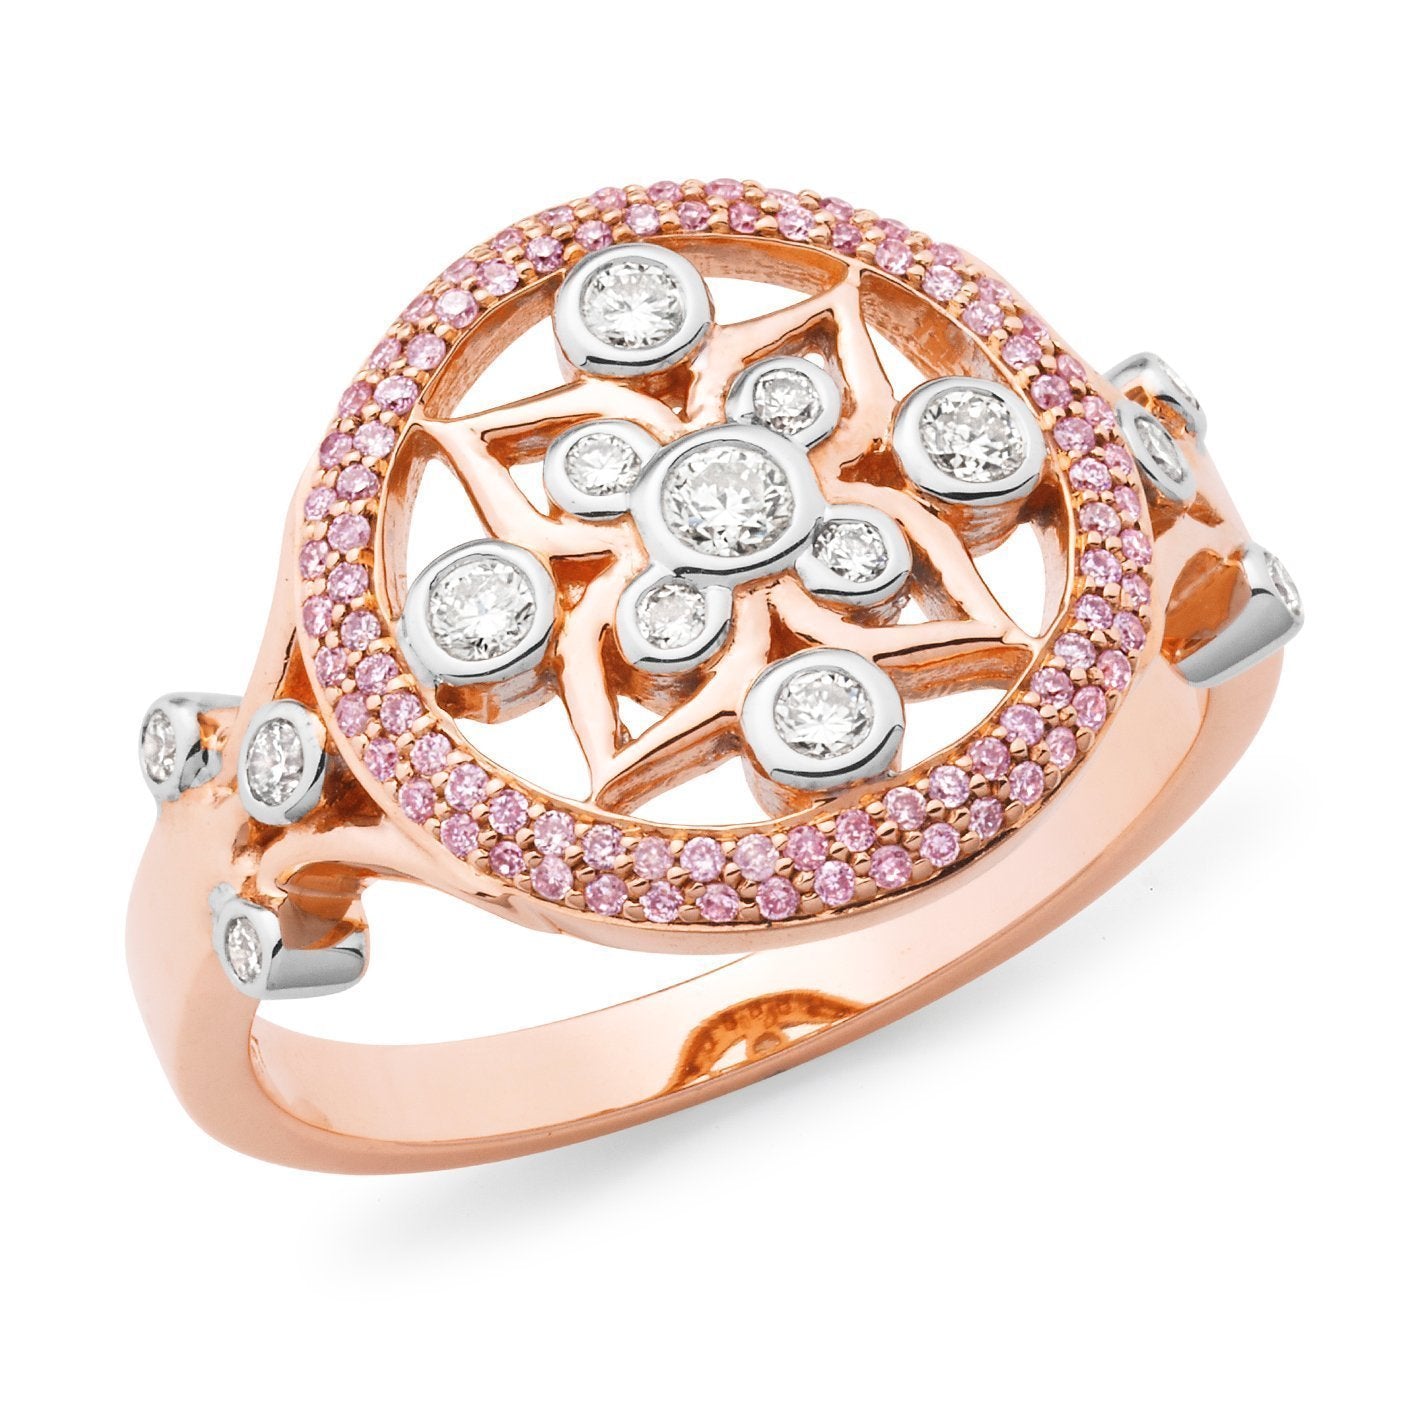 PINK CAVIAR 0.44ct Pink Diamond Ring in 9ct White & Rose Gold